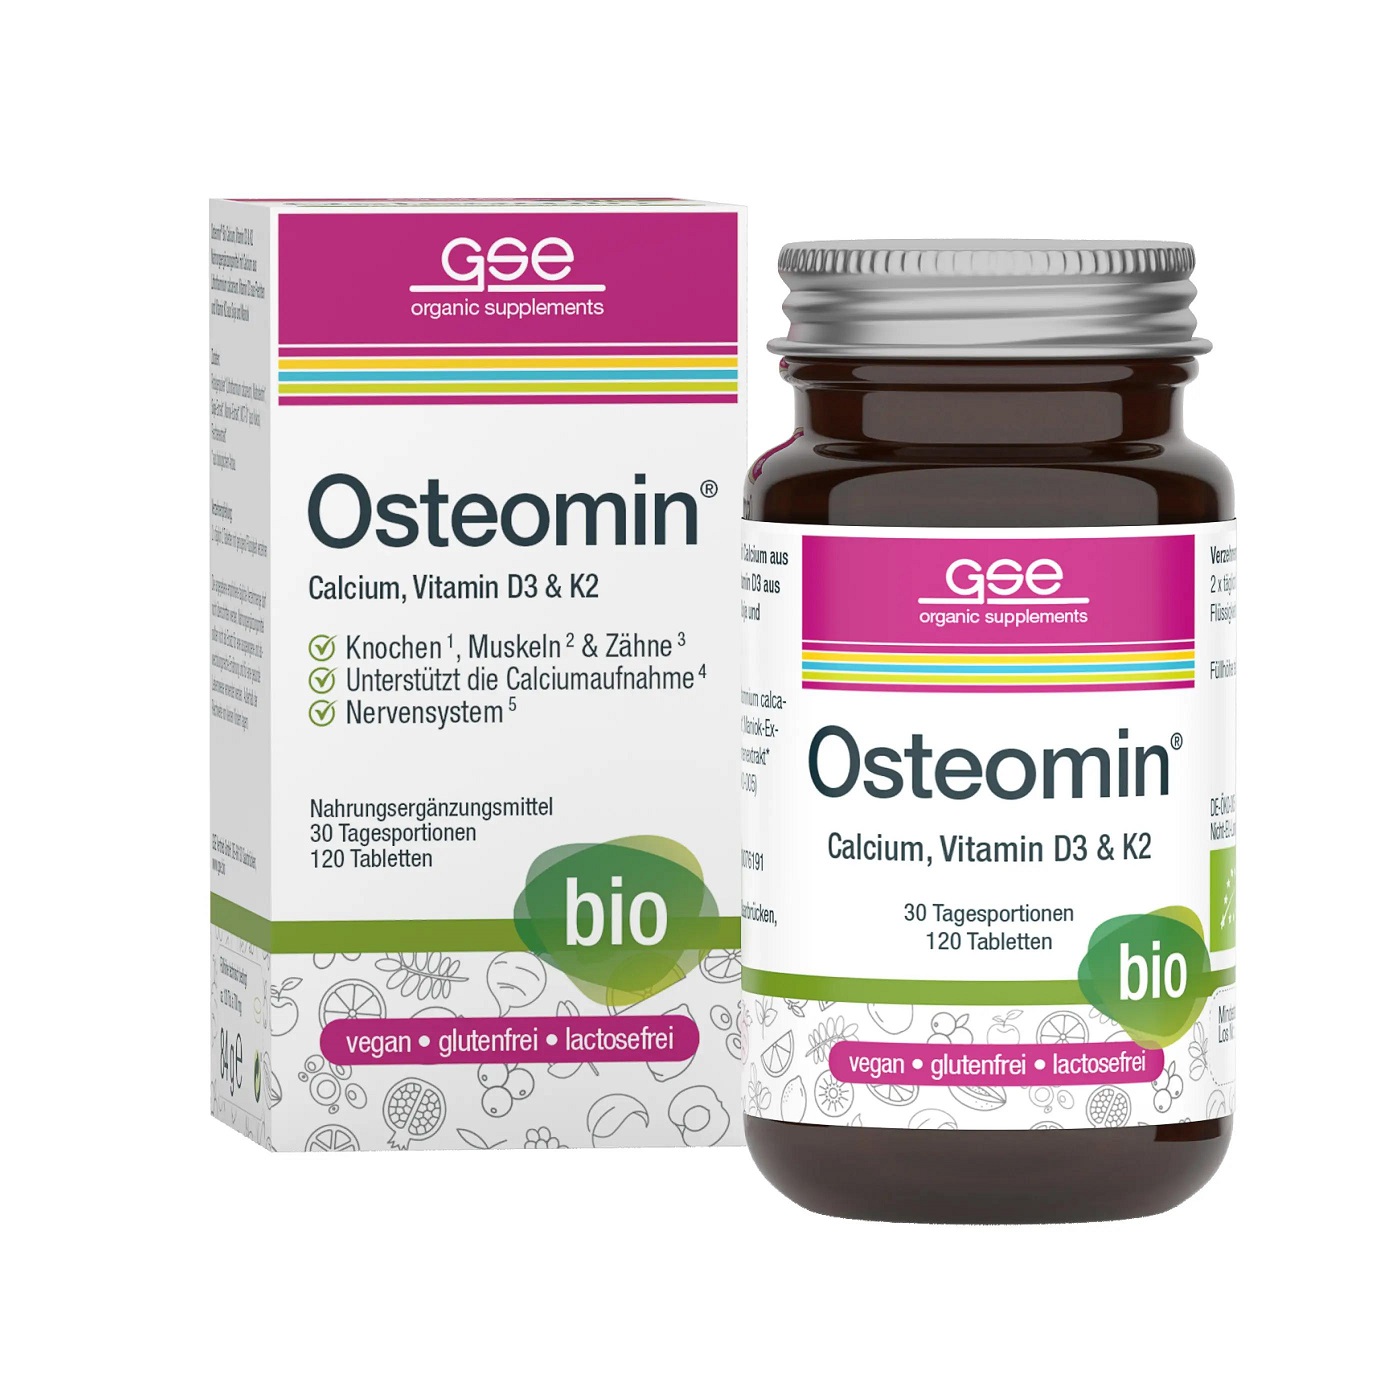 GSE Osteomin Bio | Calcium, Vitamin D3 & K2 | 120 Tabletten